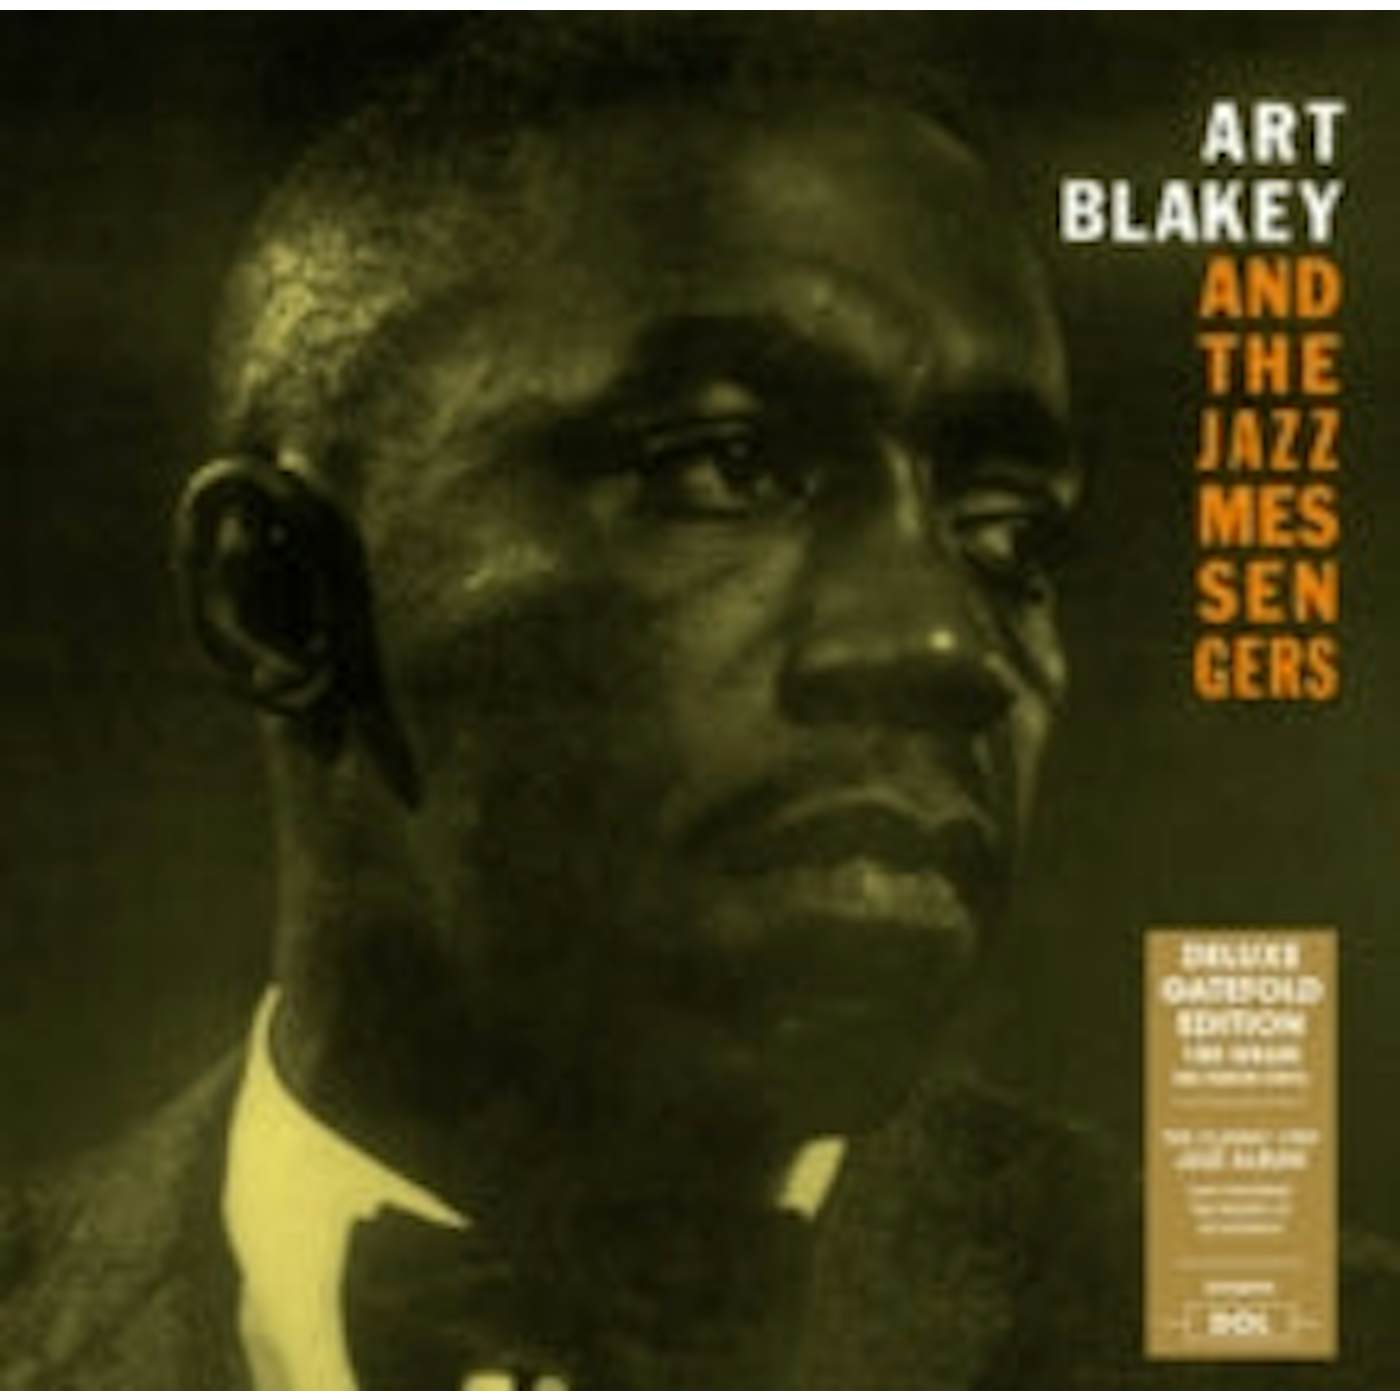 Art Blakey & The Jazz Messengers LP Vinyl Record - Art Blakey & The Jazz Messengers